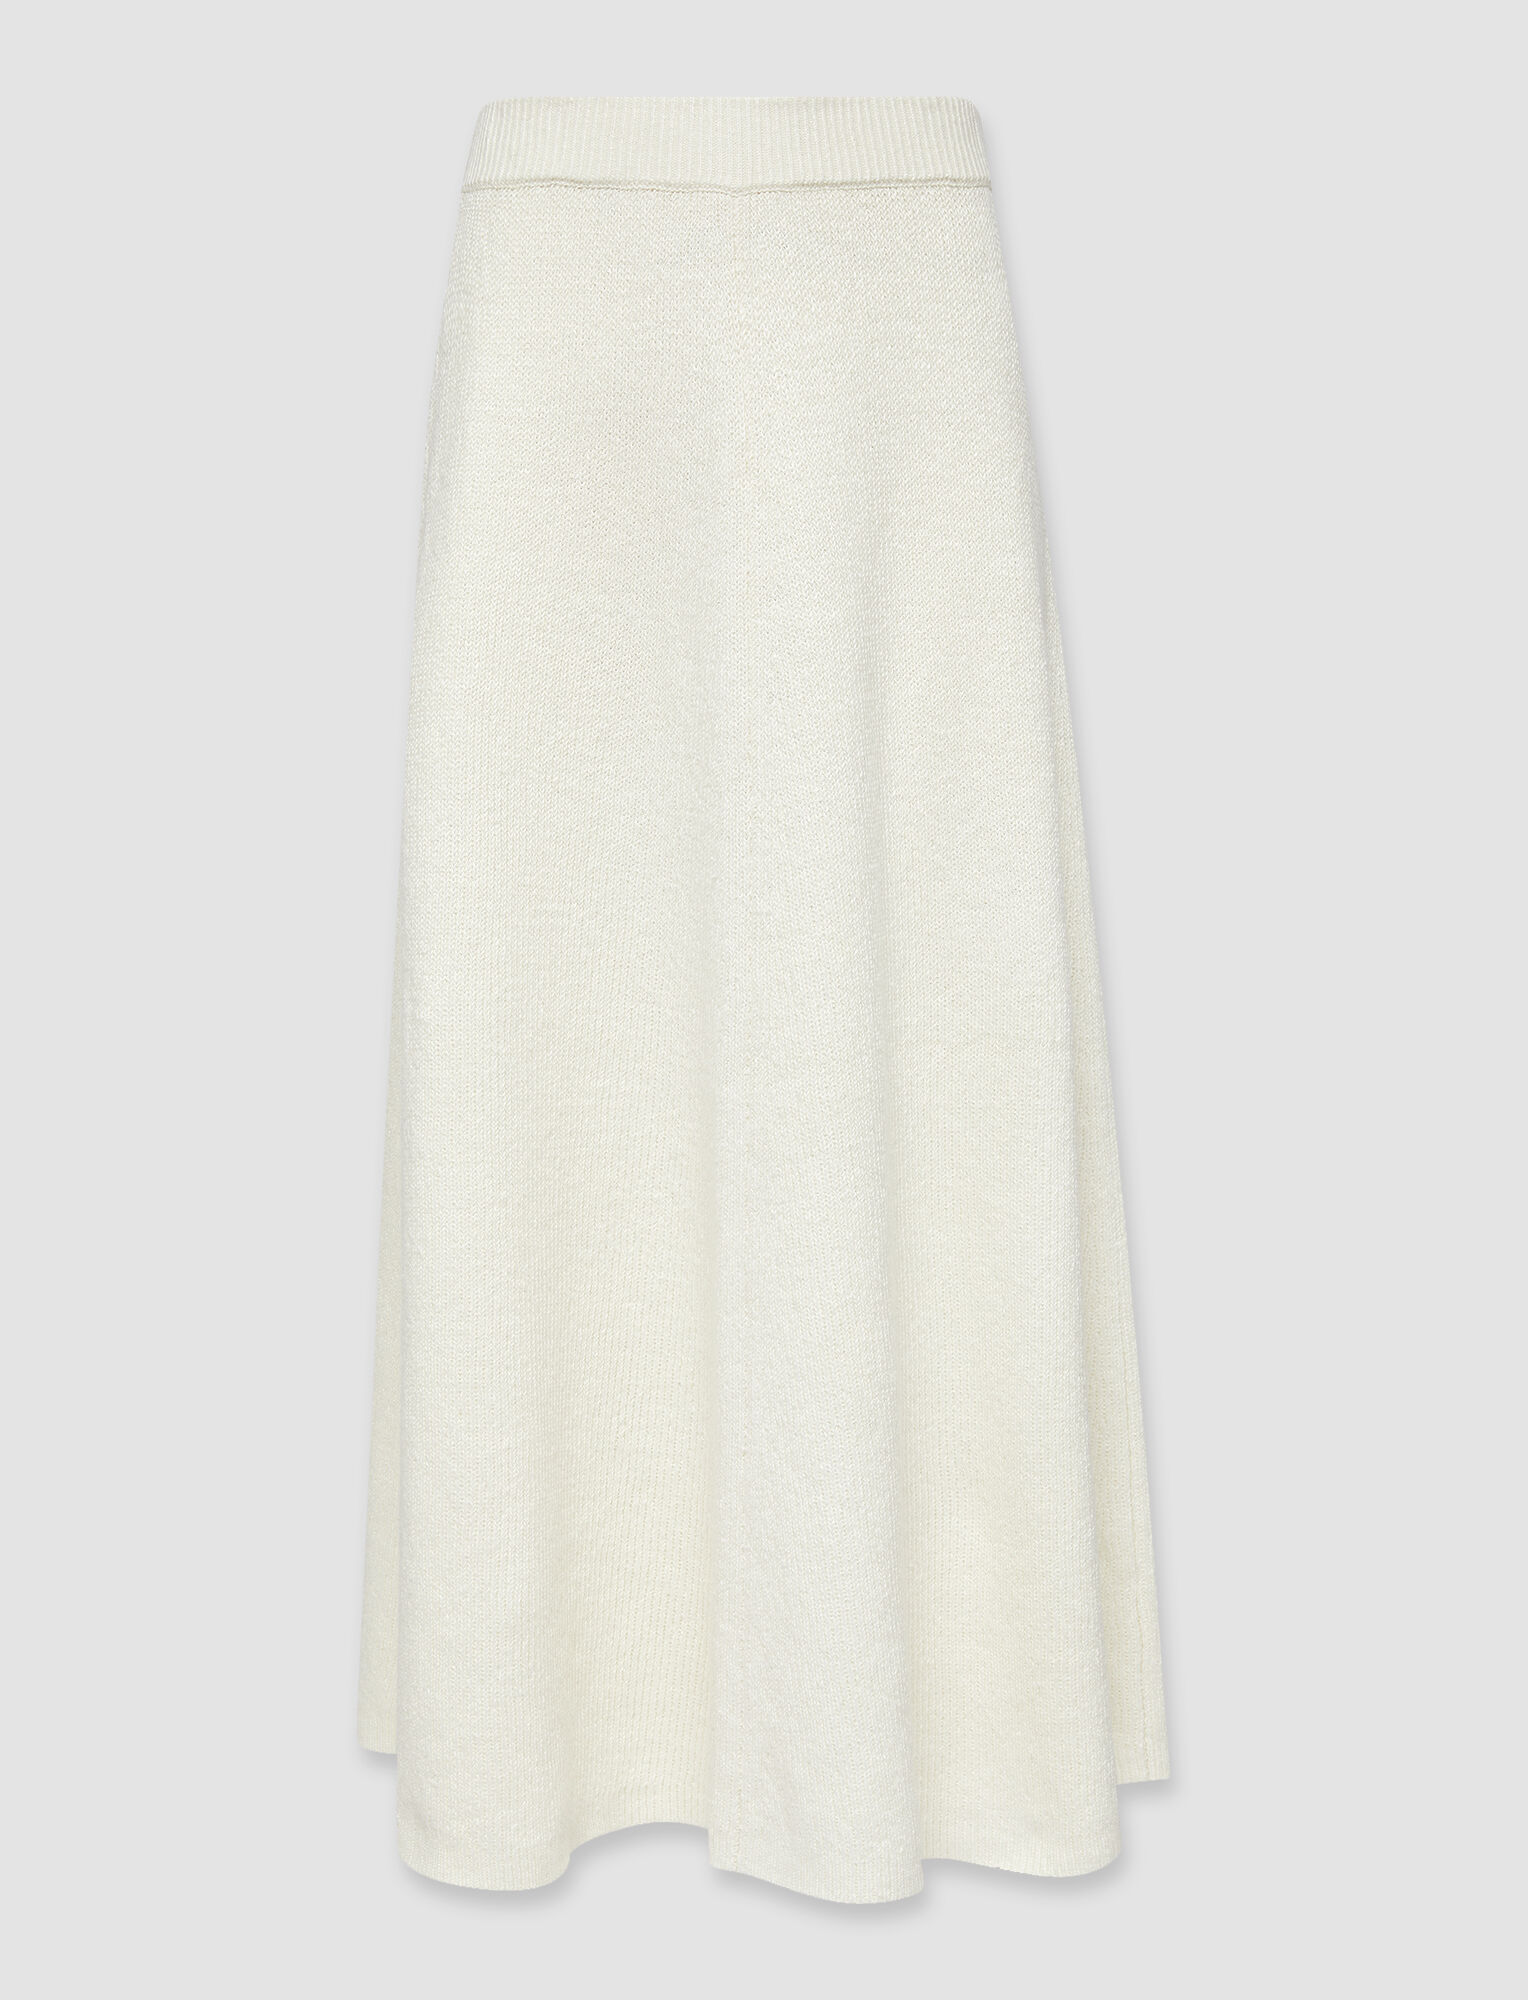 Joseph, Linen Cardigan Stitch Skirt, in Ivory